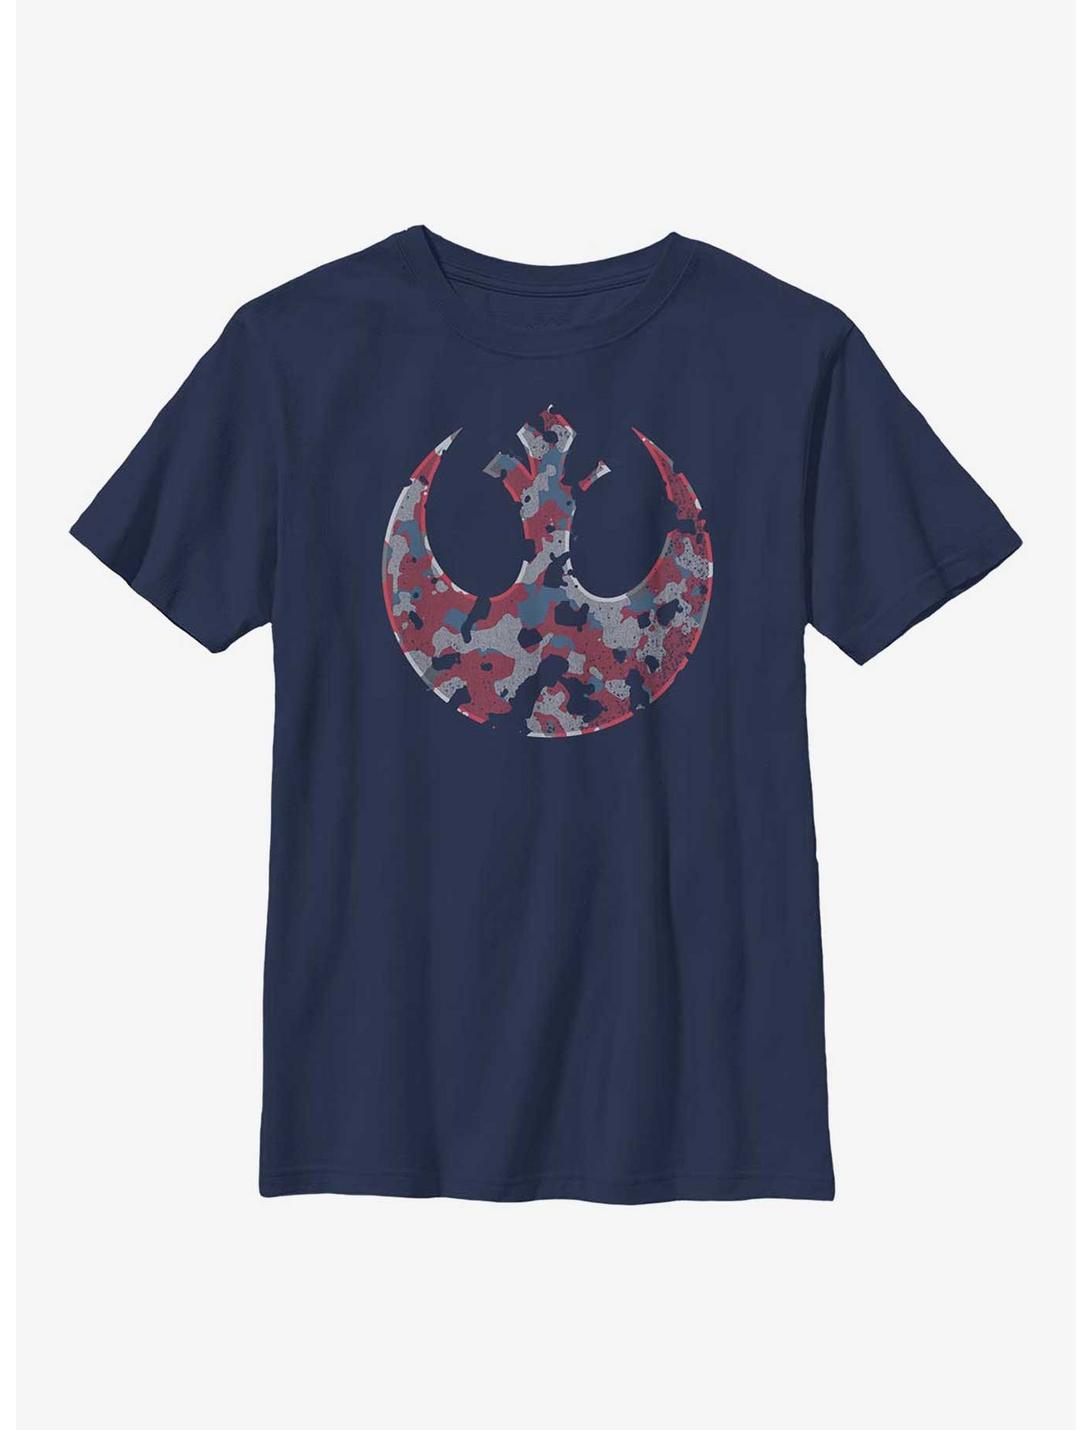 Star Wars Camo Rebel Crest Youth T-Shirt, NAVY, hi-res